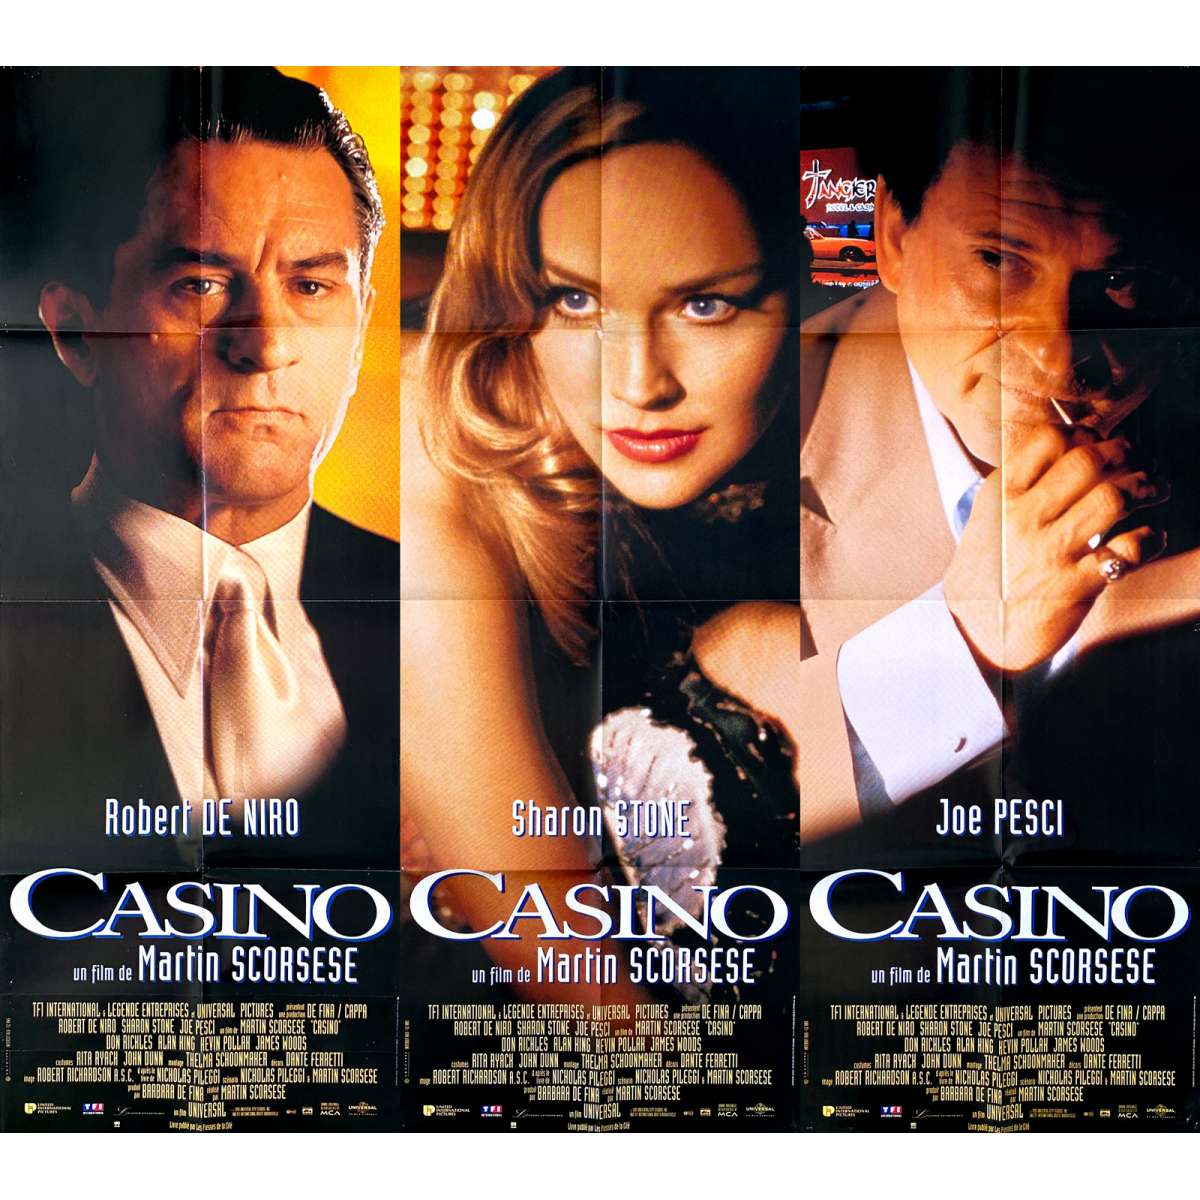 Casino movie online 1995 казино монако игровые автоматы